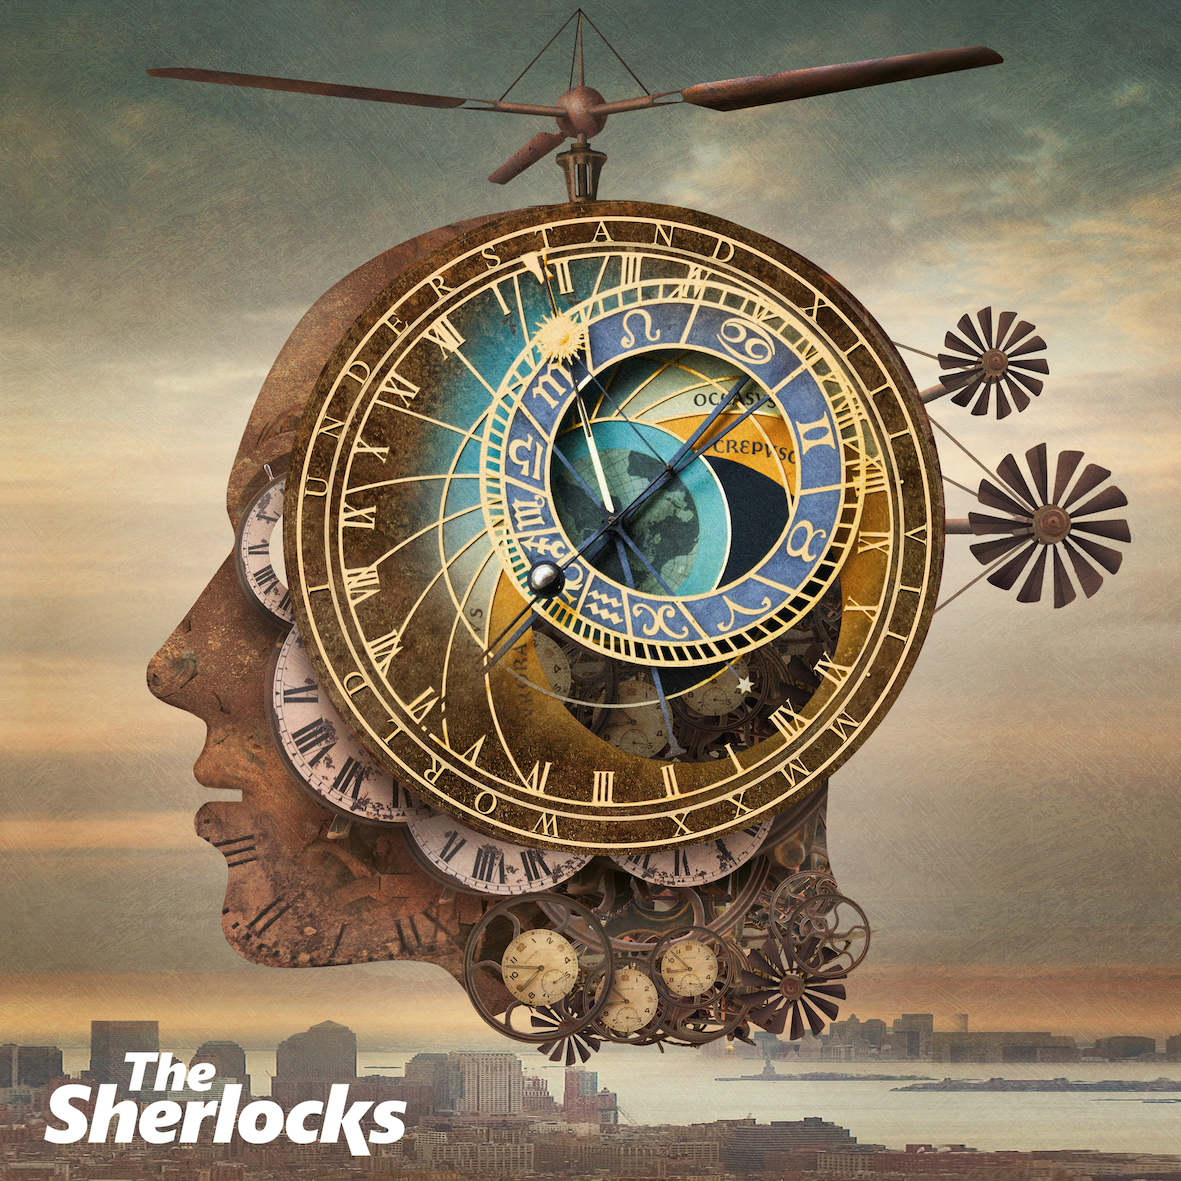 ALBUM REVIEW: The Sherlocks - World I Understand 